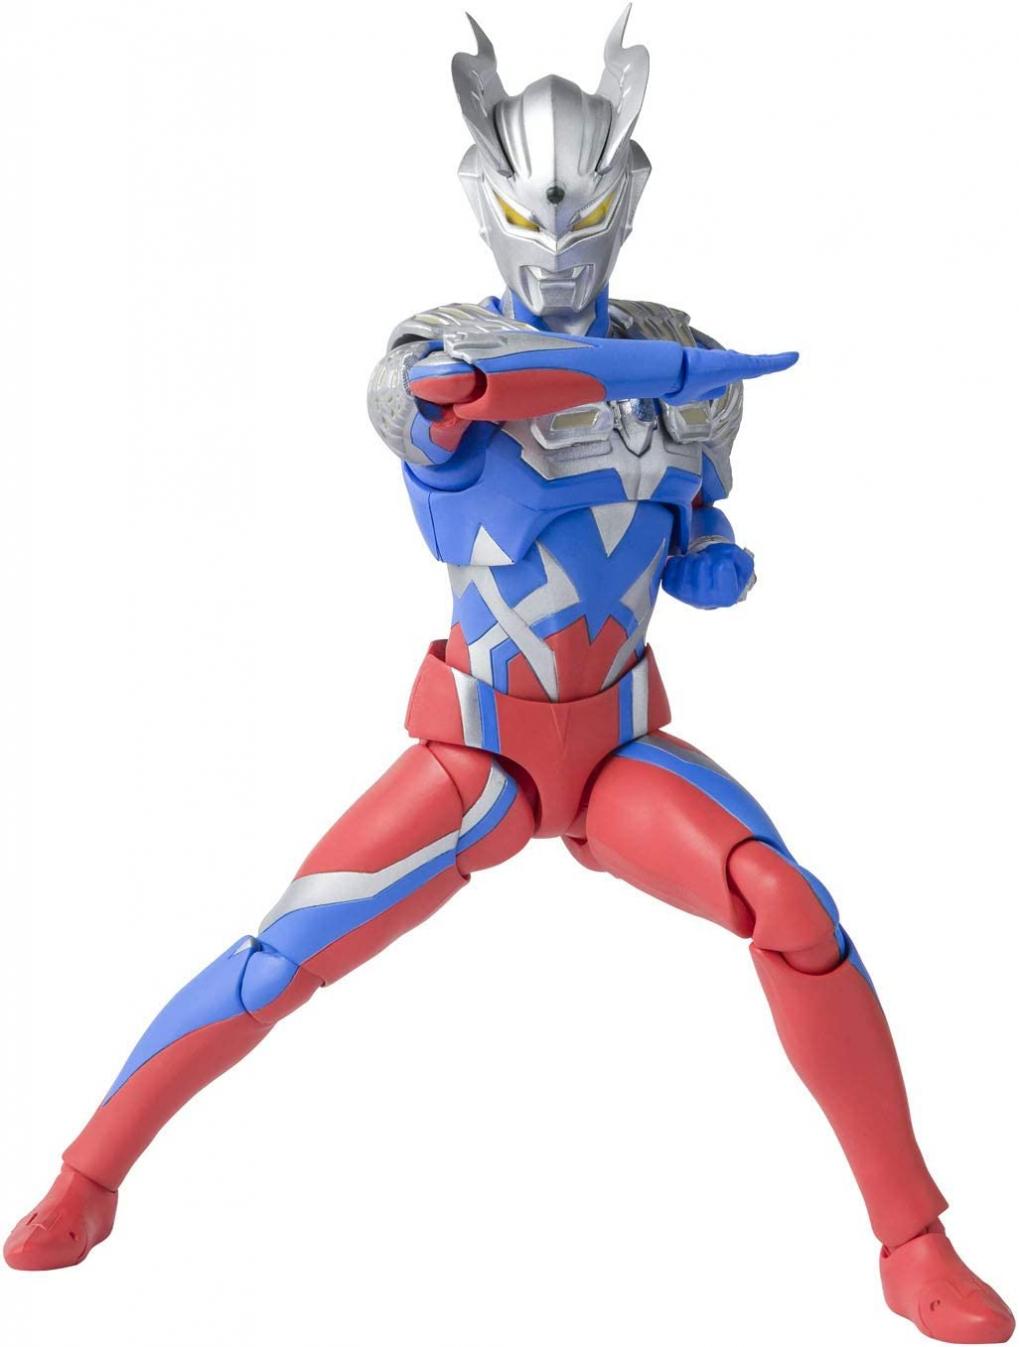 Bandai Tamashii Nations S.H. Figuarts Ultraman Zero Action Figure